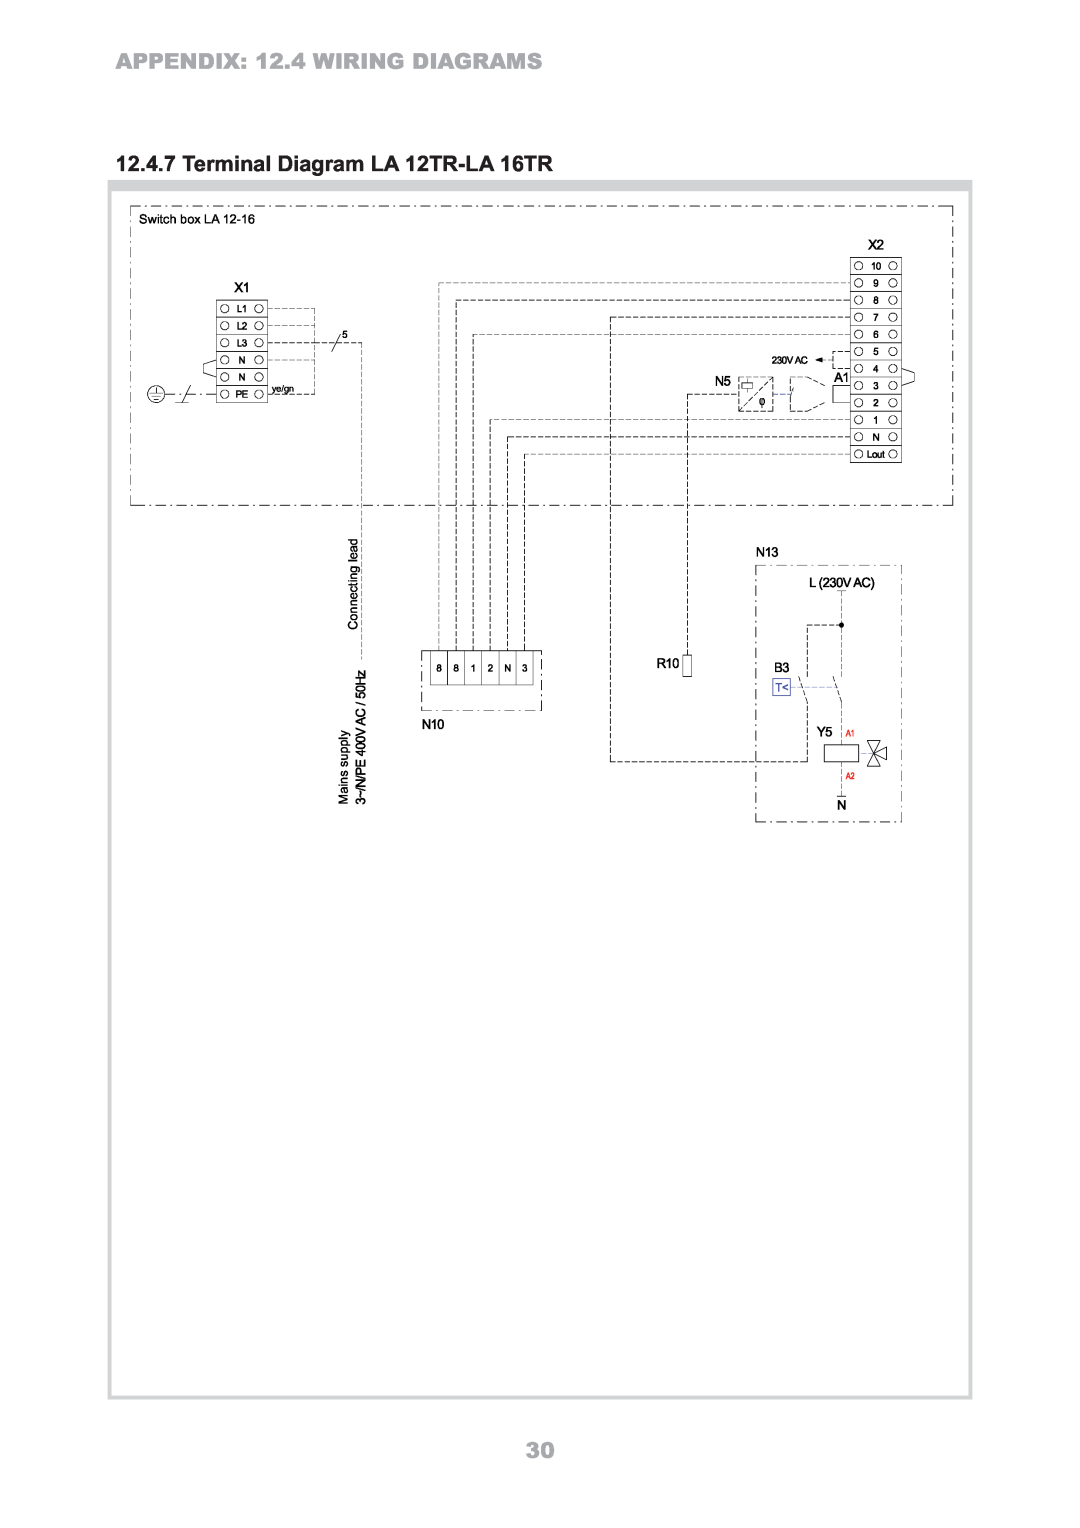 Dimplex LA 8MR, LA 6MR Terminal Diagram LA 12TR-LA16TR, APPENDIX 12.4 WIRING DIAGRAMS, Switch box LA, Connecting lead 